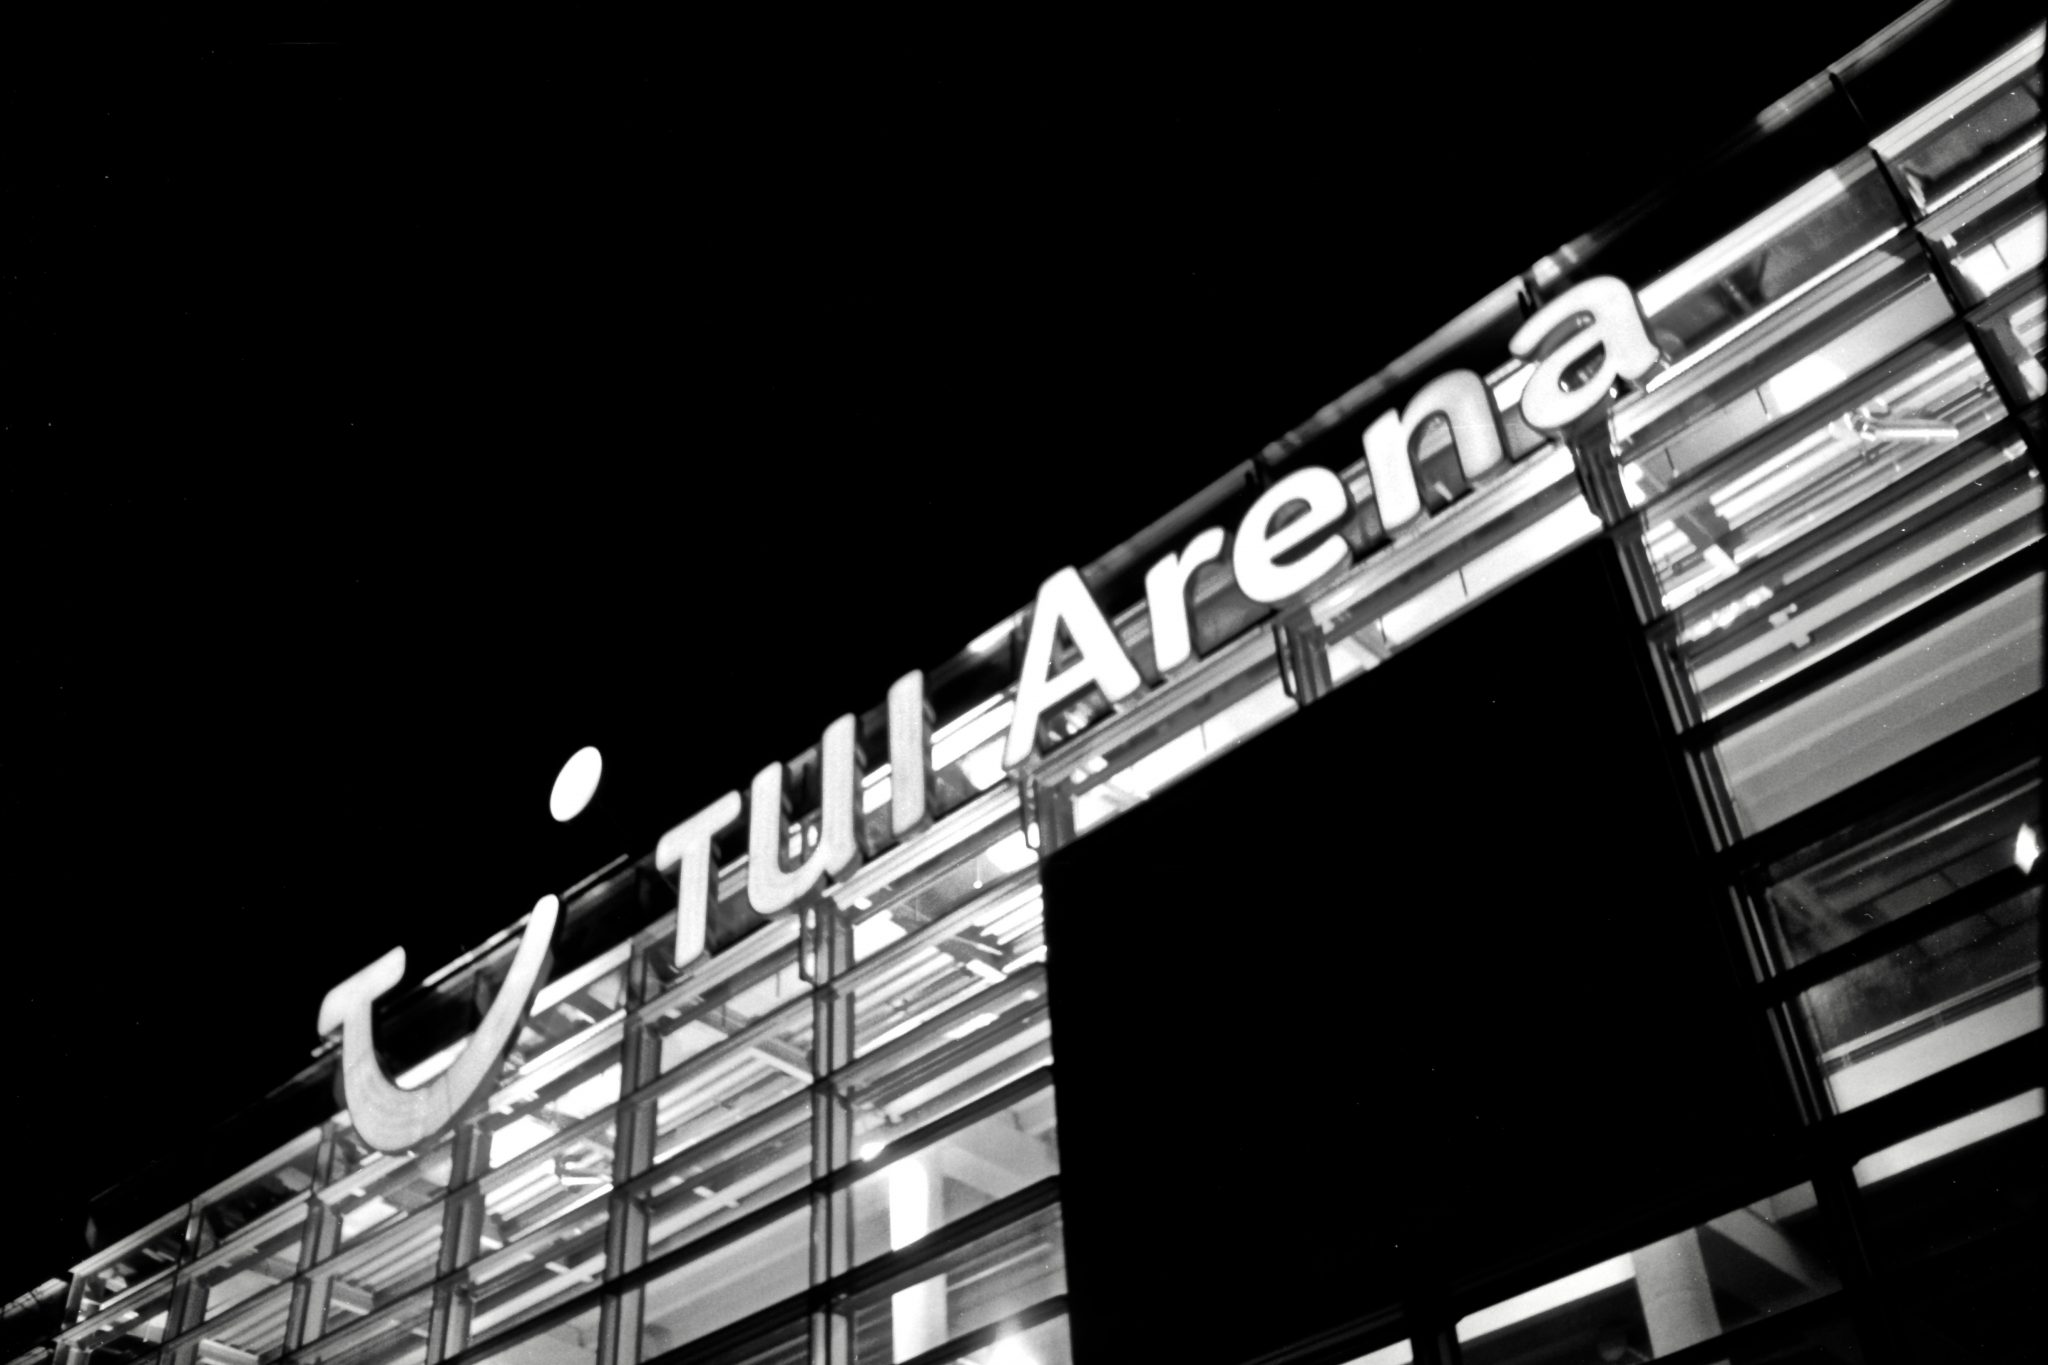 Tui Arena